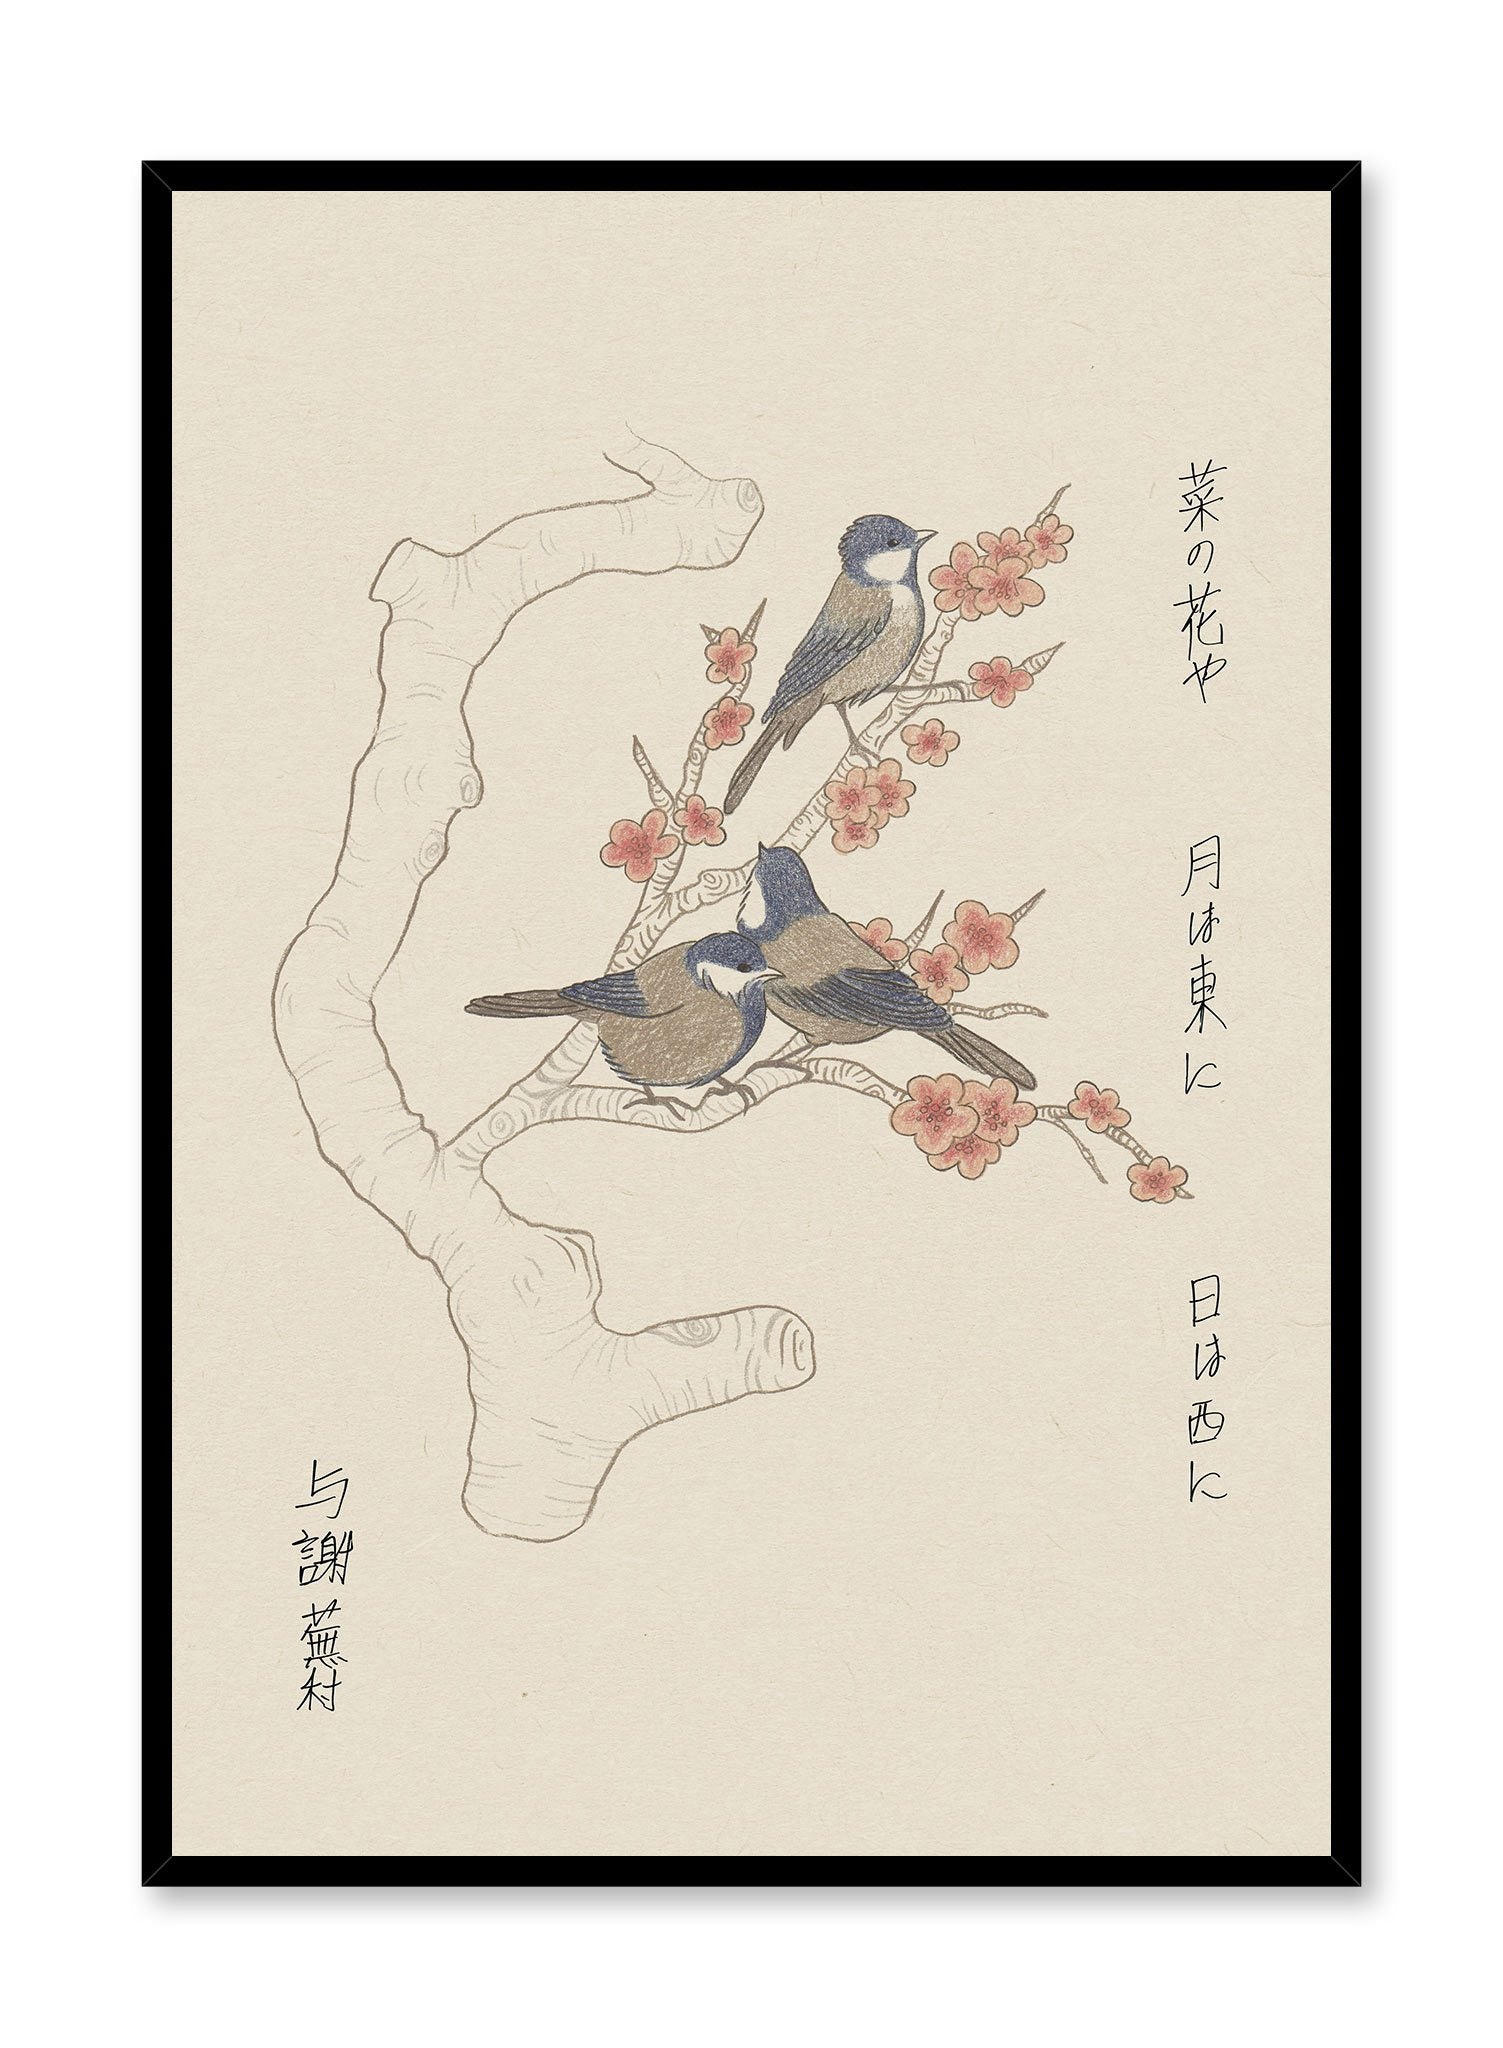 Bluebird Breakfast is a minimalist illustration by Opposite Wall of three bluebirds sitting on a cherry blossom branch.